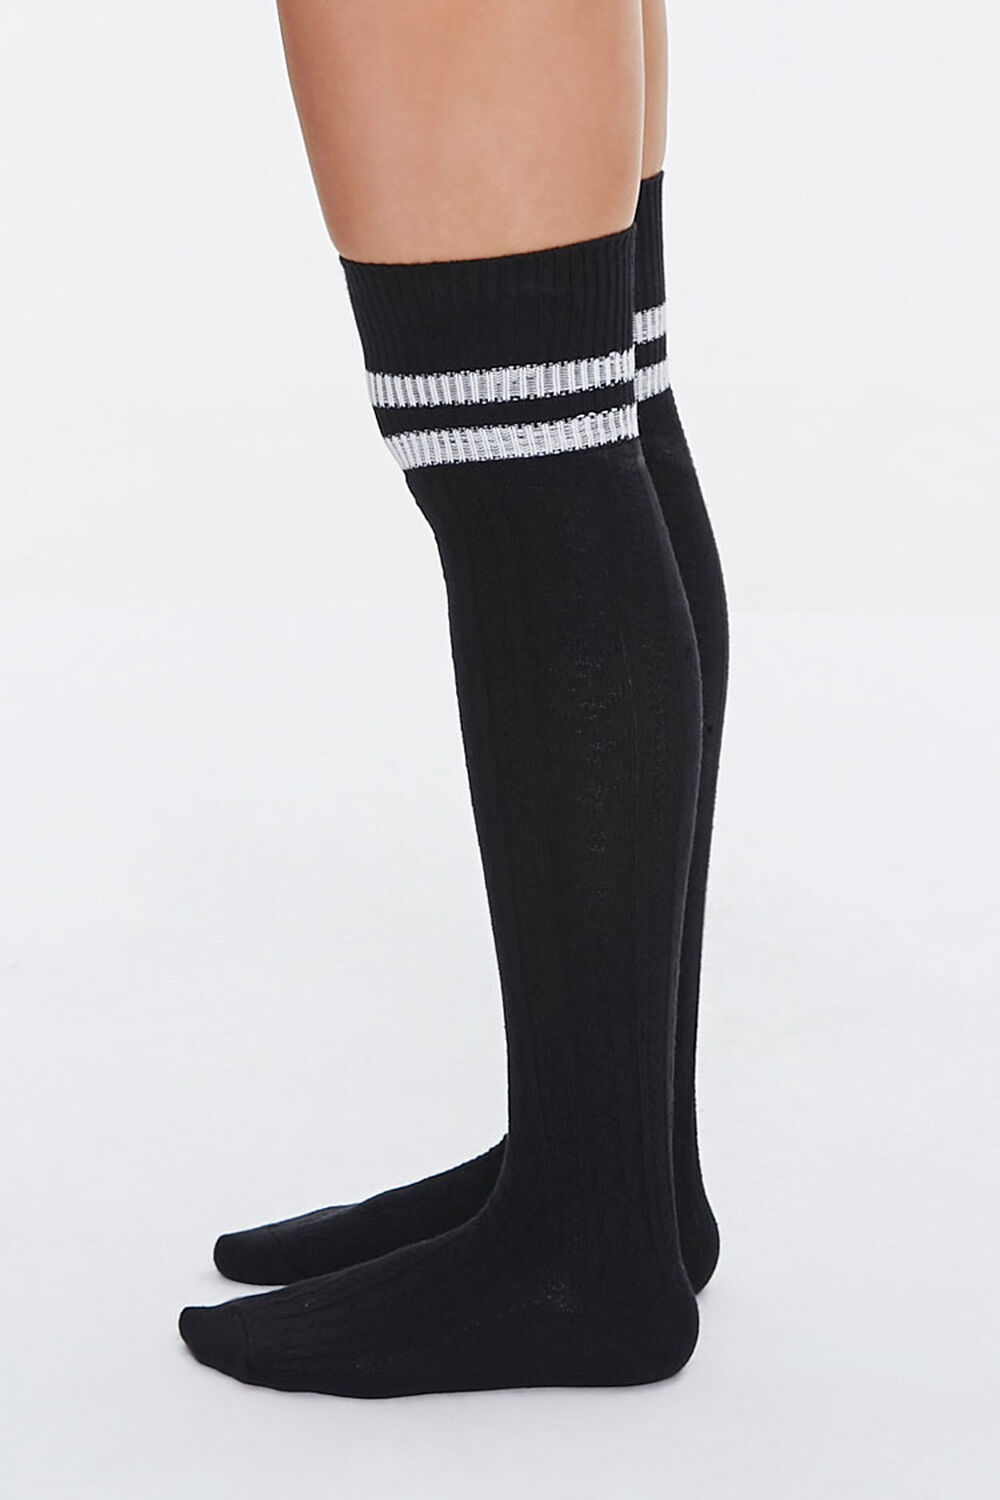 Over-the-Knee Striped Socks